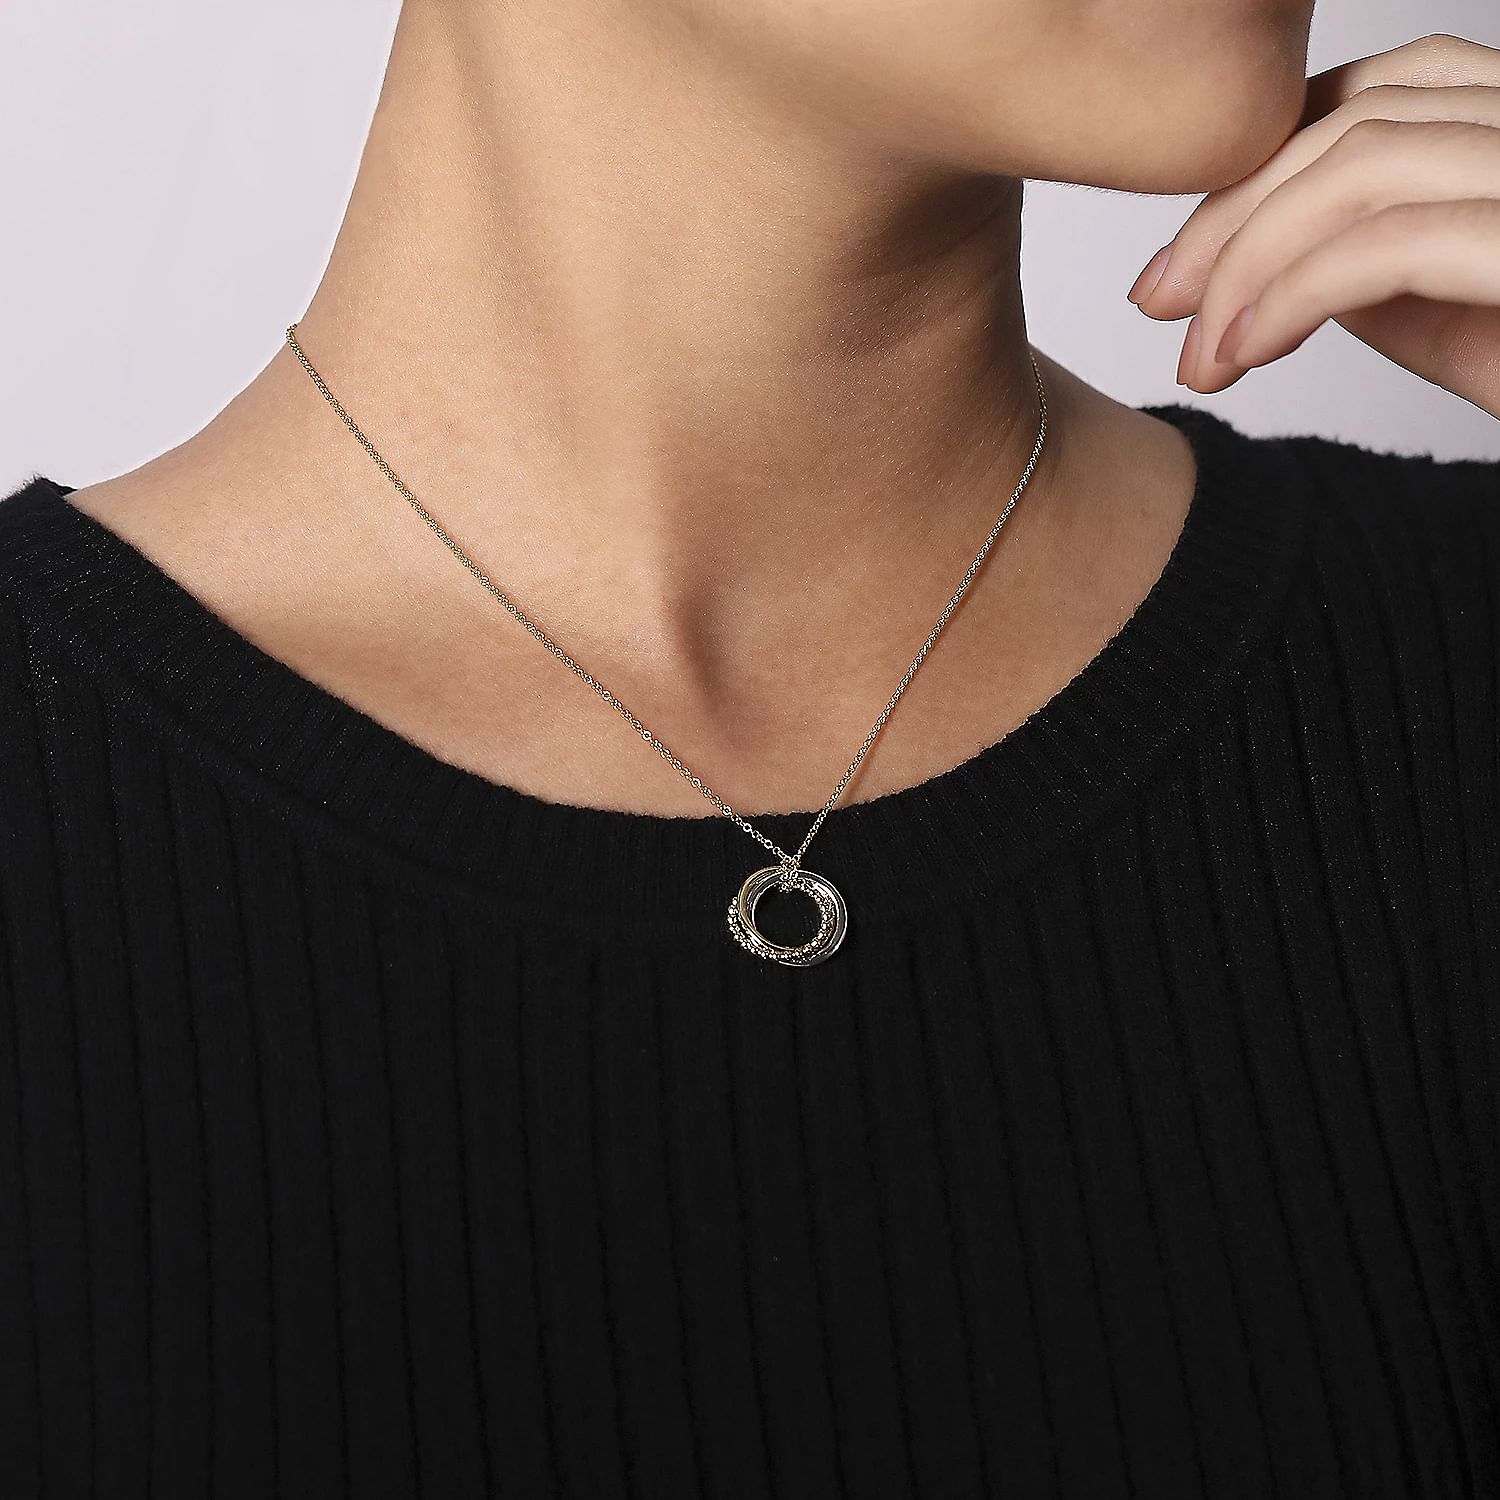 Interlocking Circle Necklace